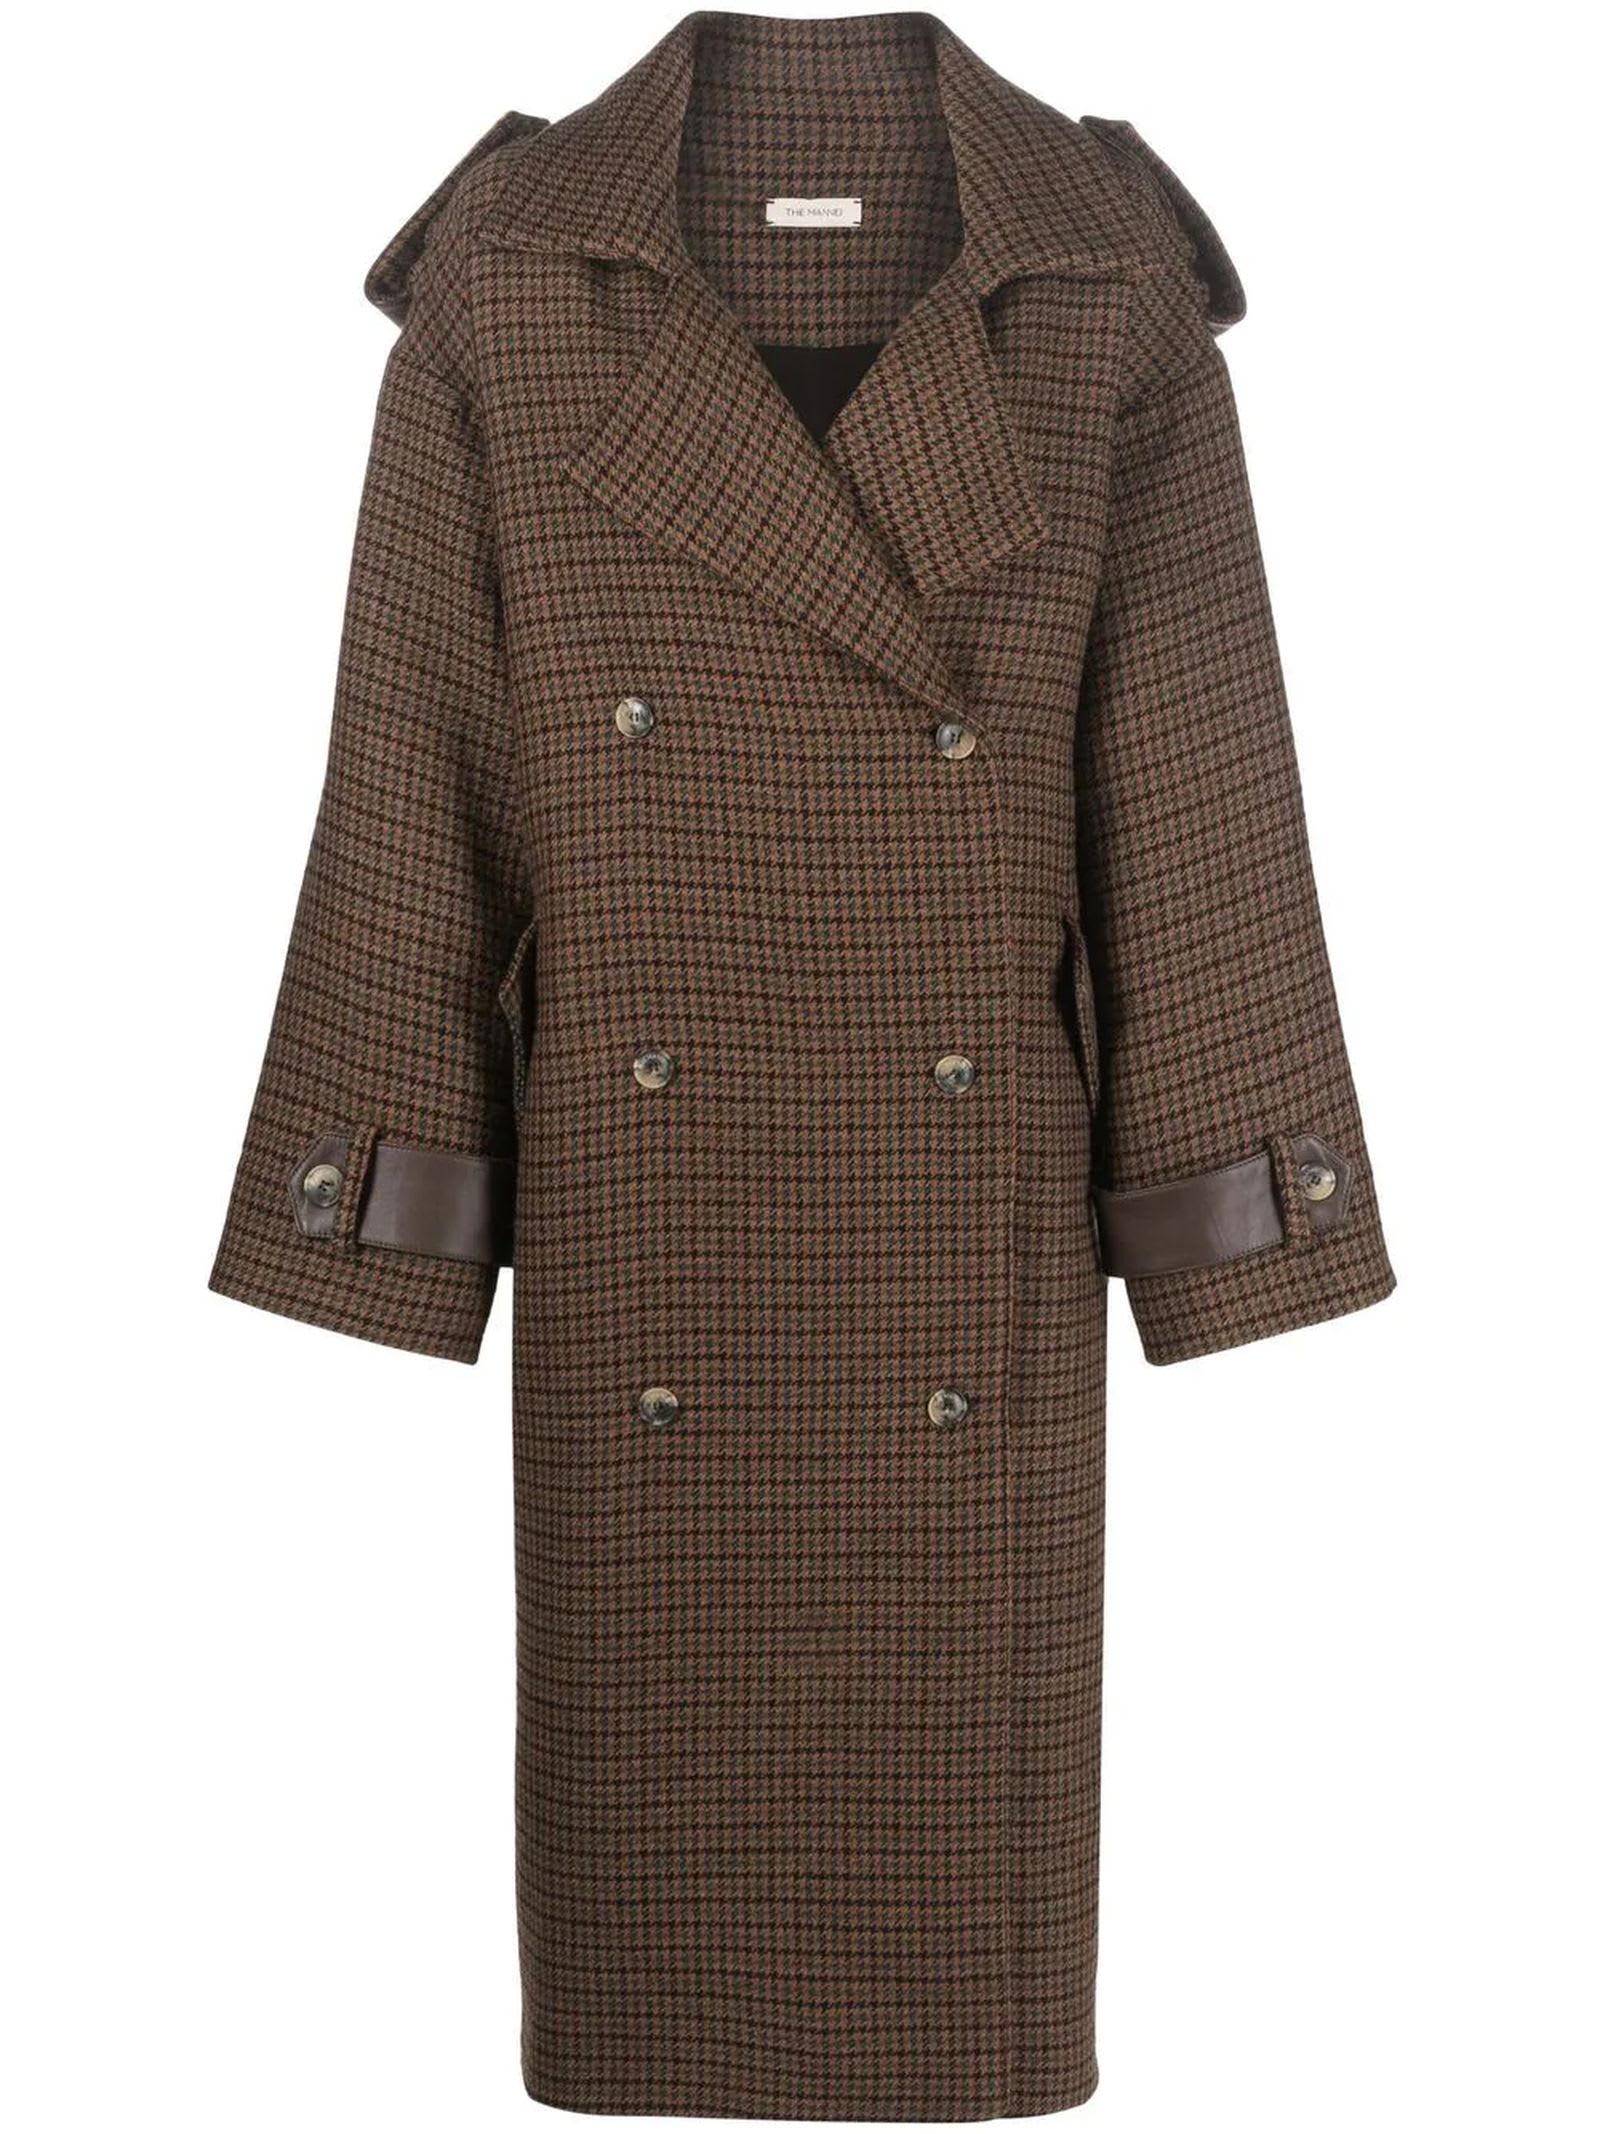 The Mannei Brown Wool Coat